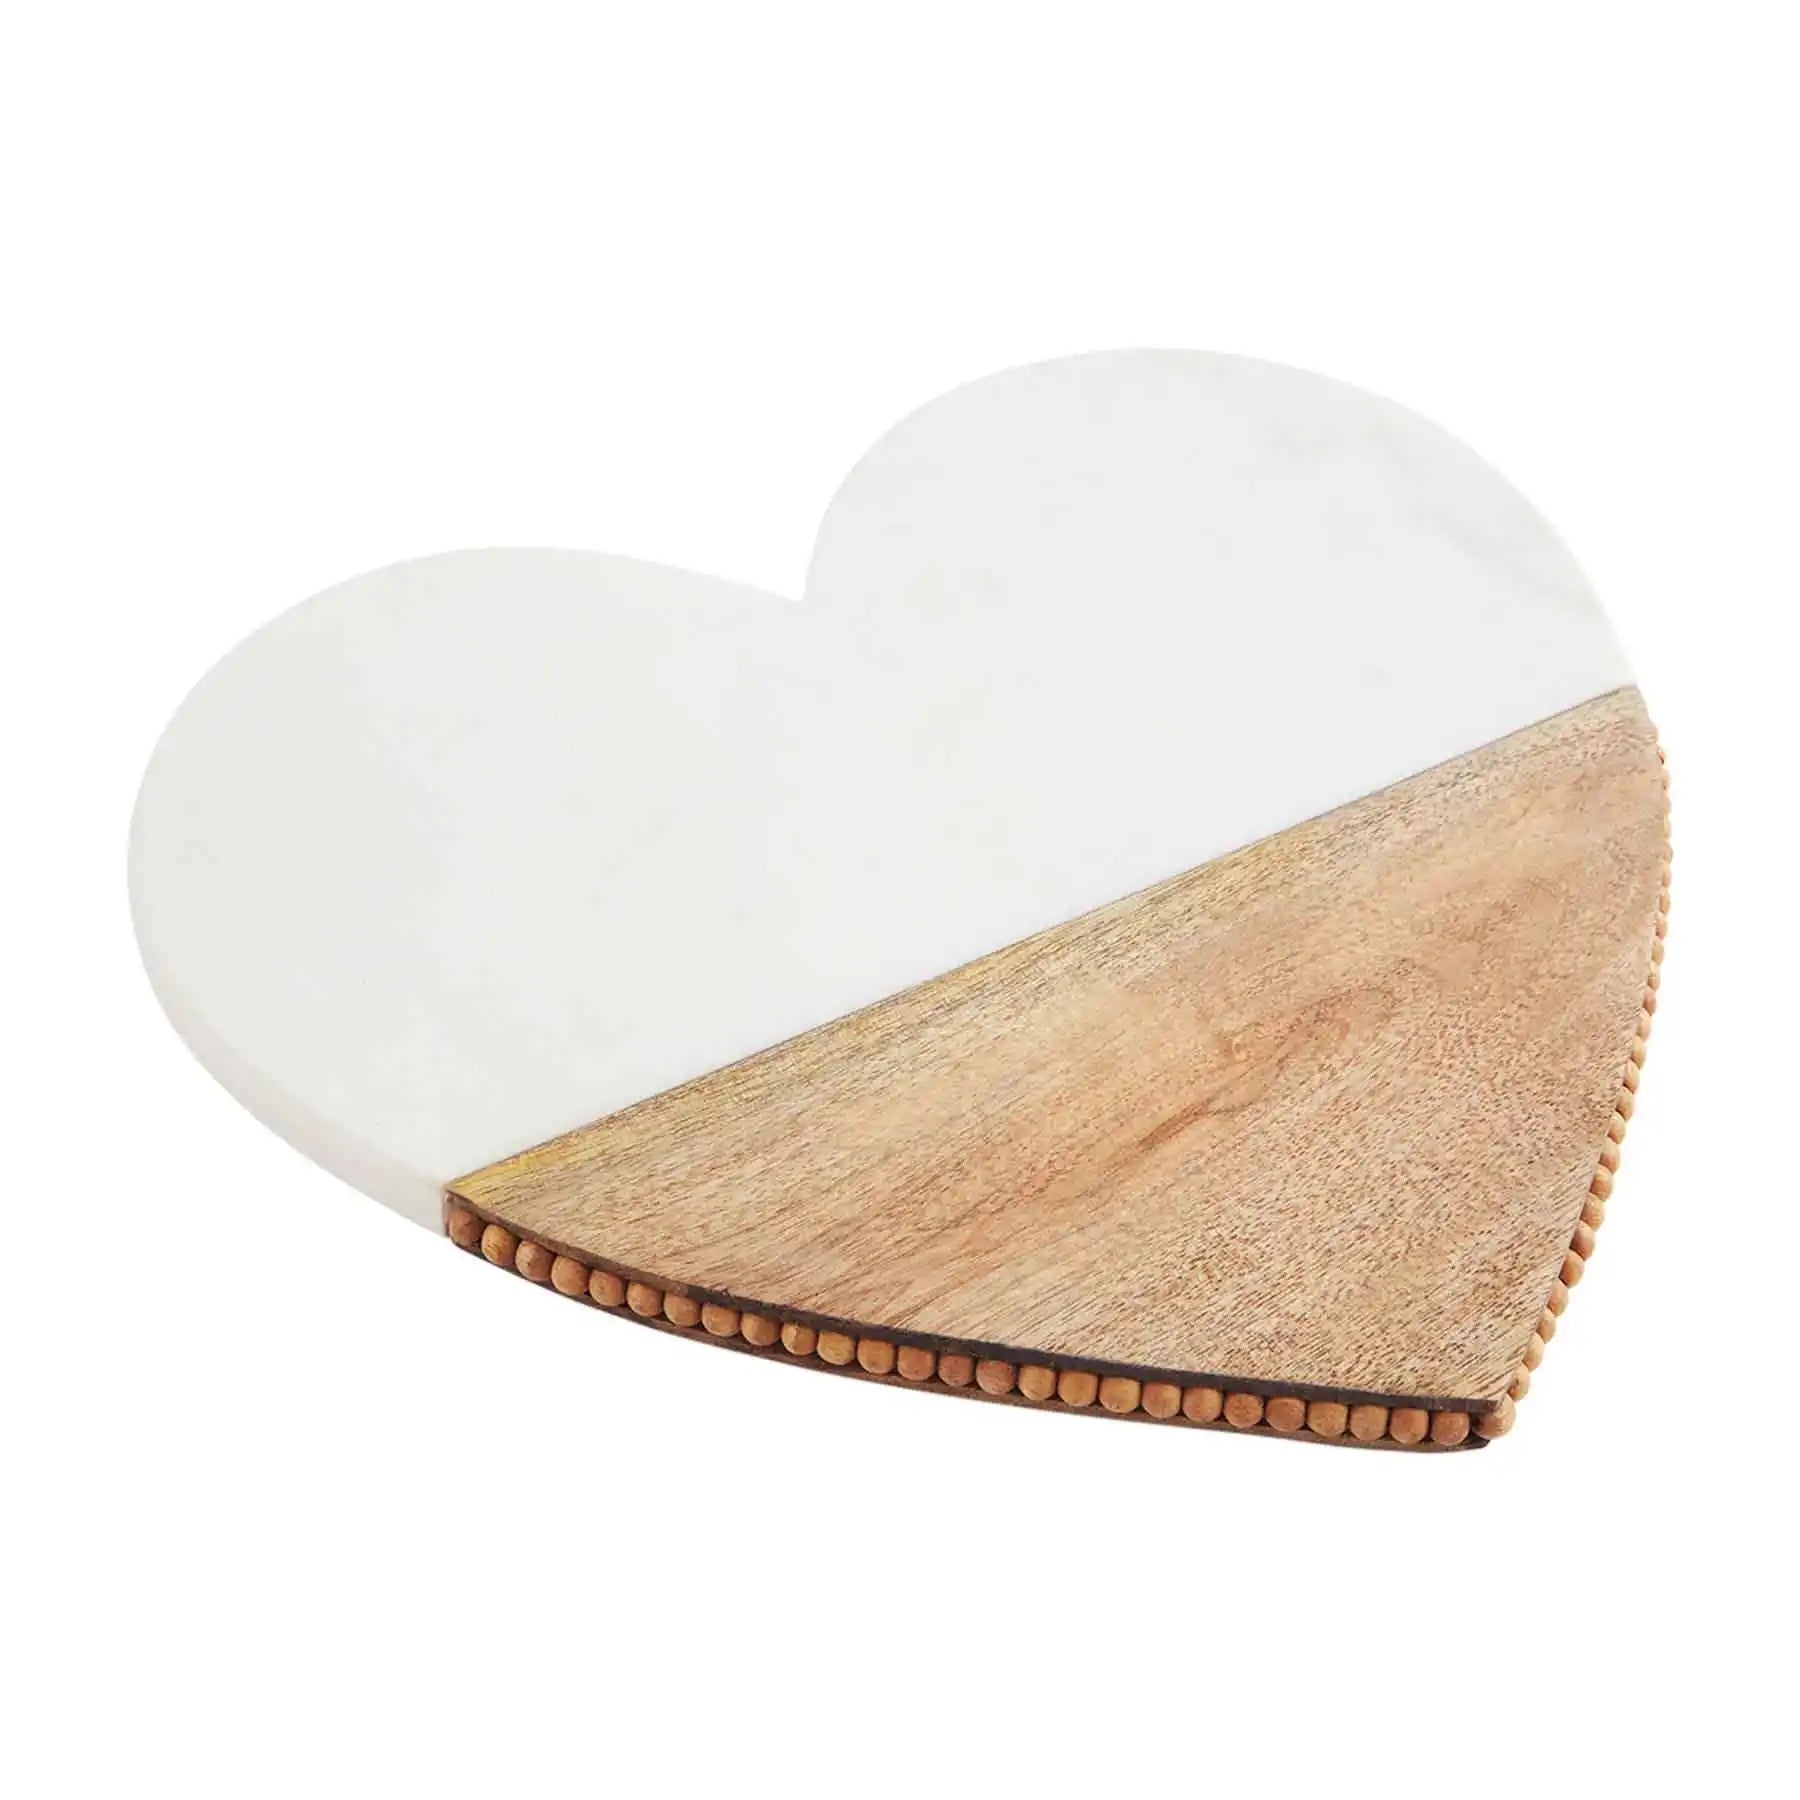 Mudpie Wood Board - Marble Large Heart